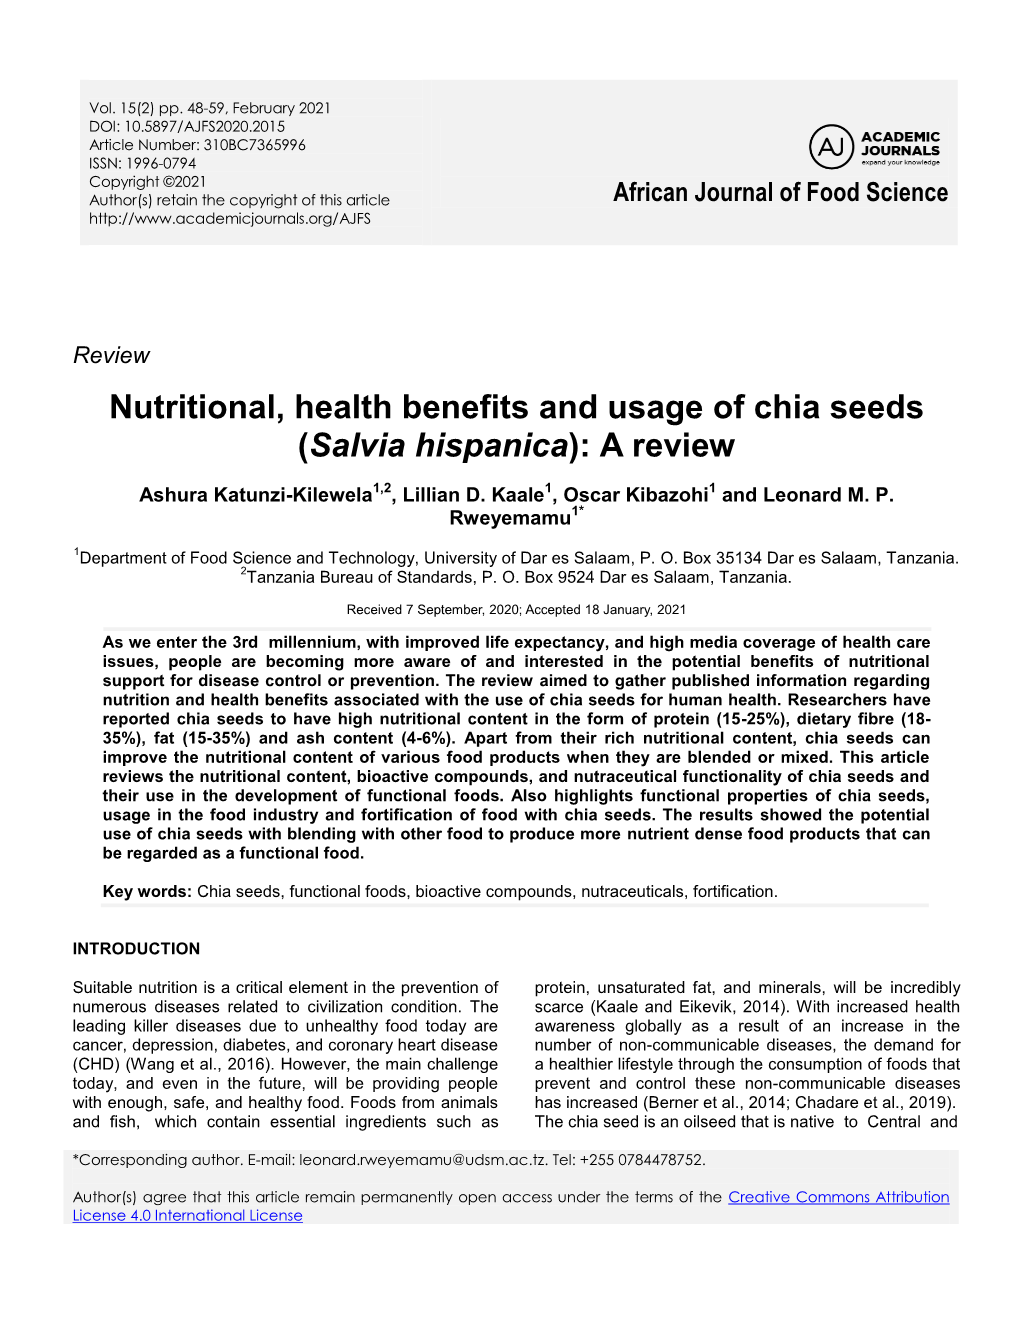 Nutritional, Health Benefits and Usage of Chia Seeds (Salvia Hispanica): a Review